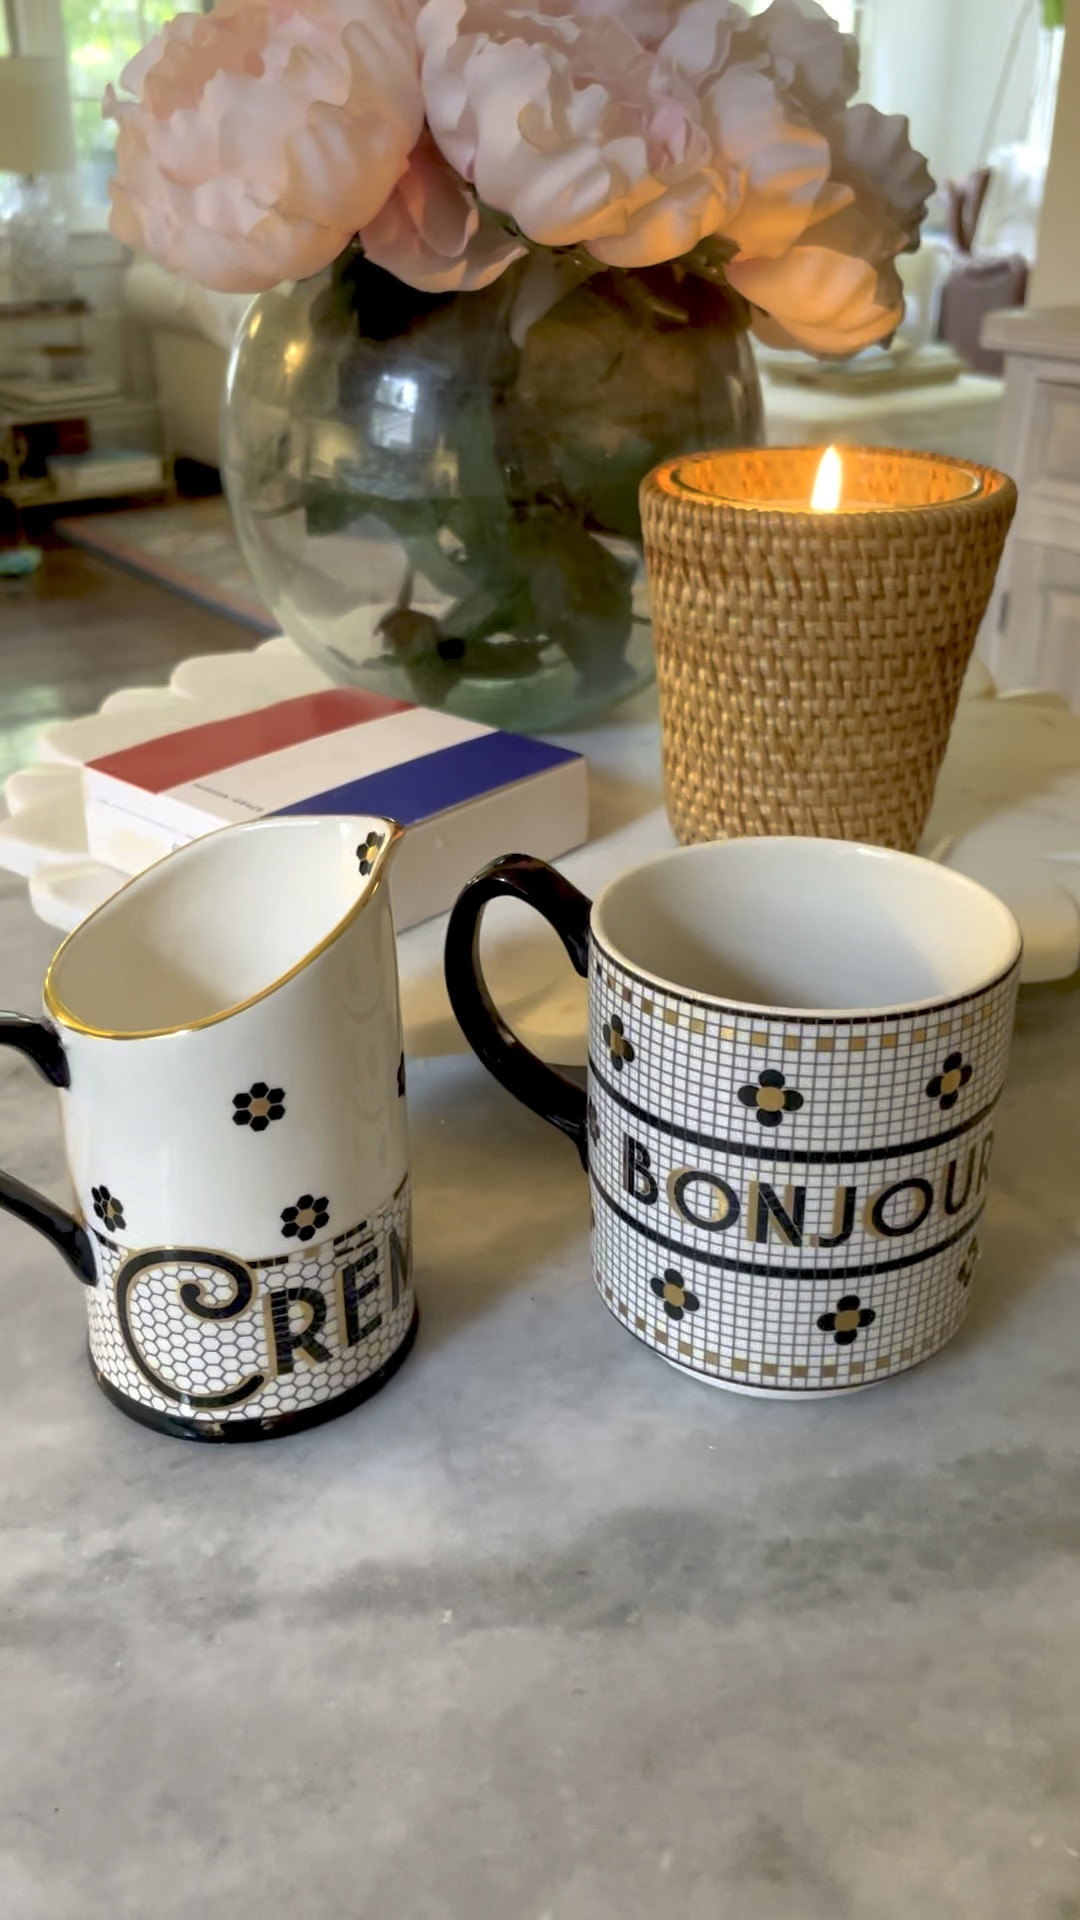 Bistro Tile Mugs, Set of 4 curated on LTK